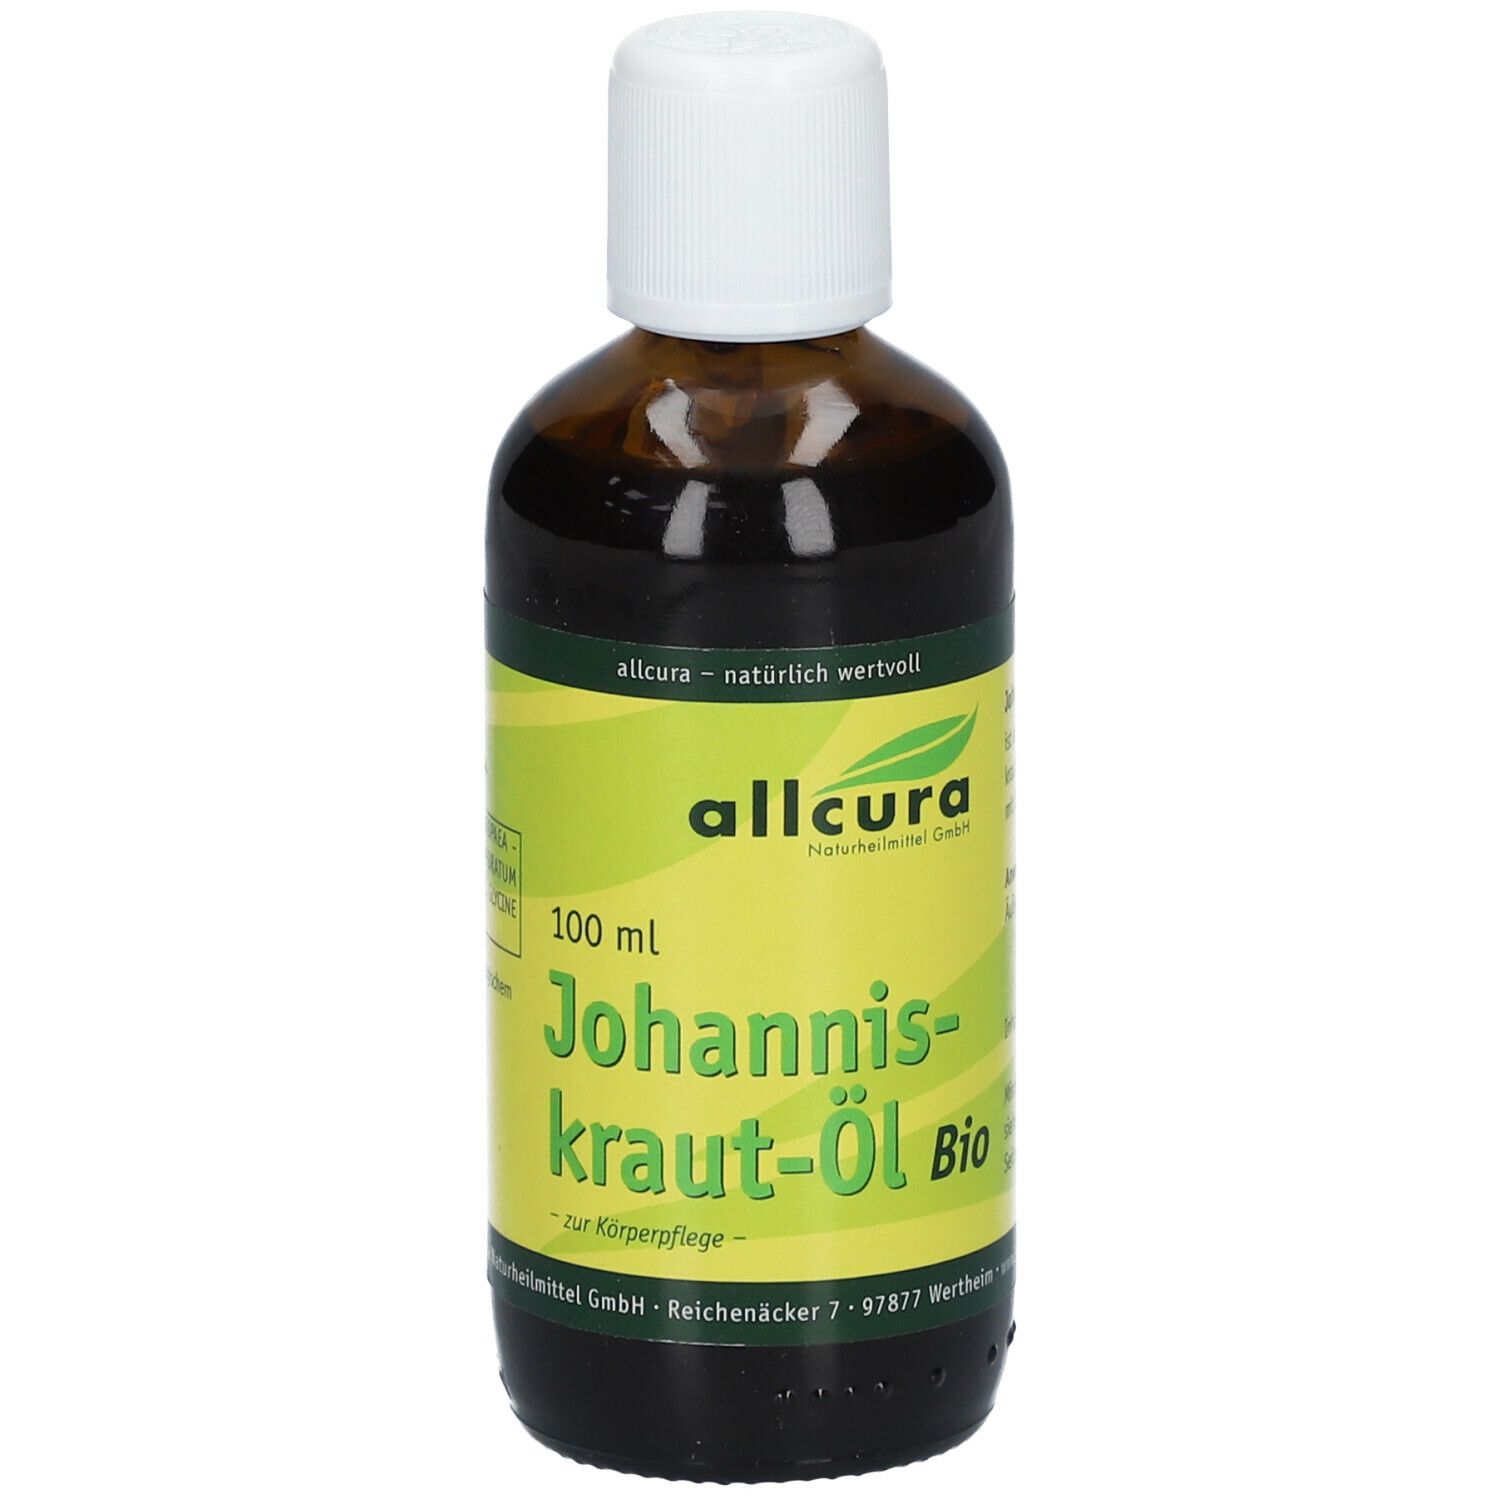 allcura Johanniskraut-Öl Bio